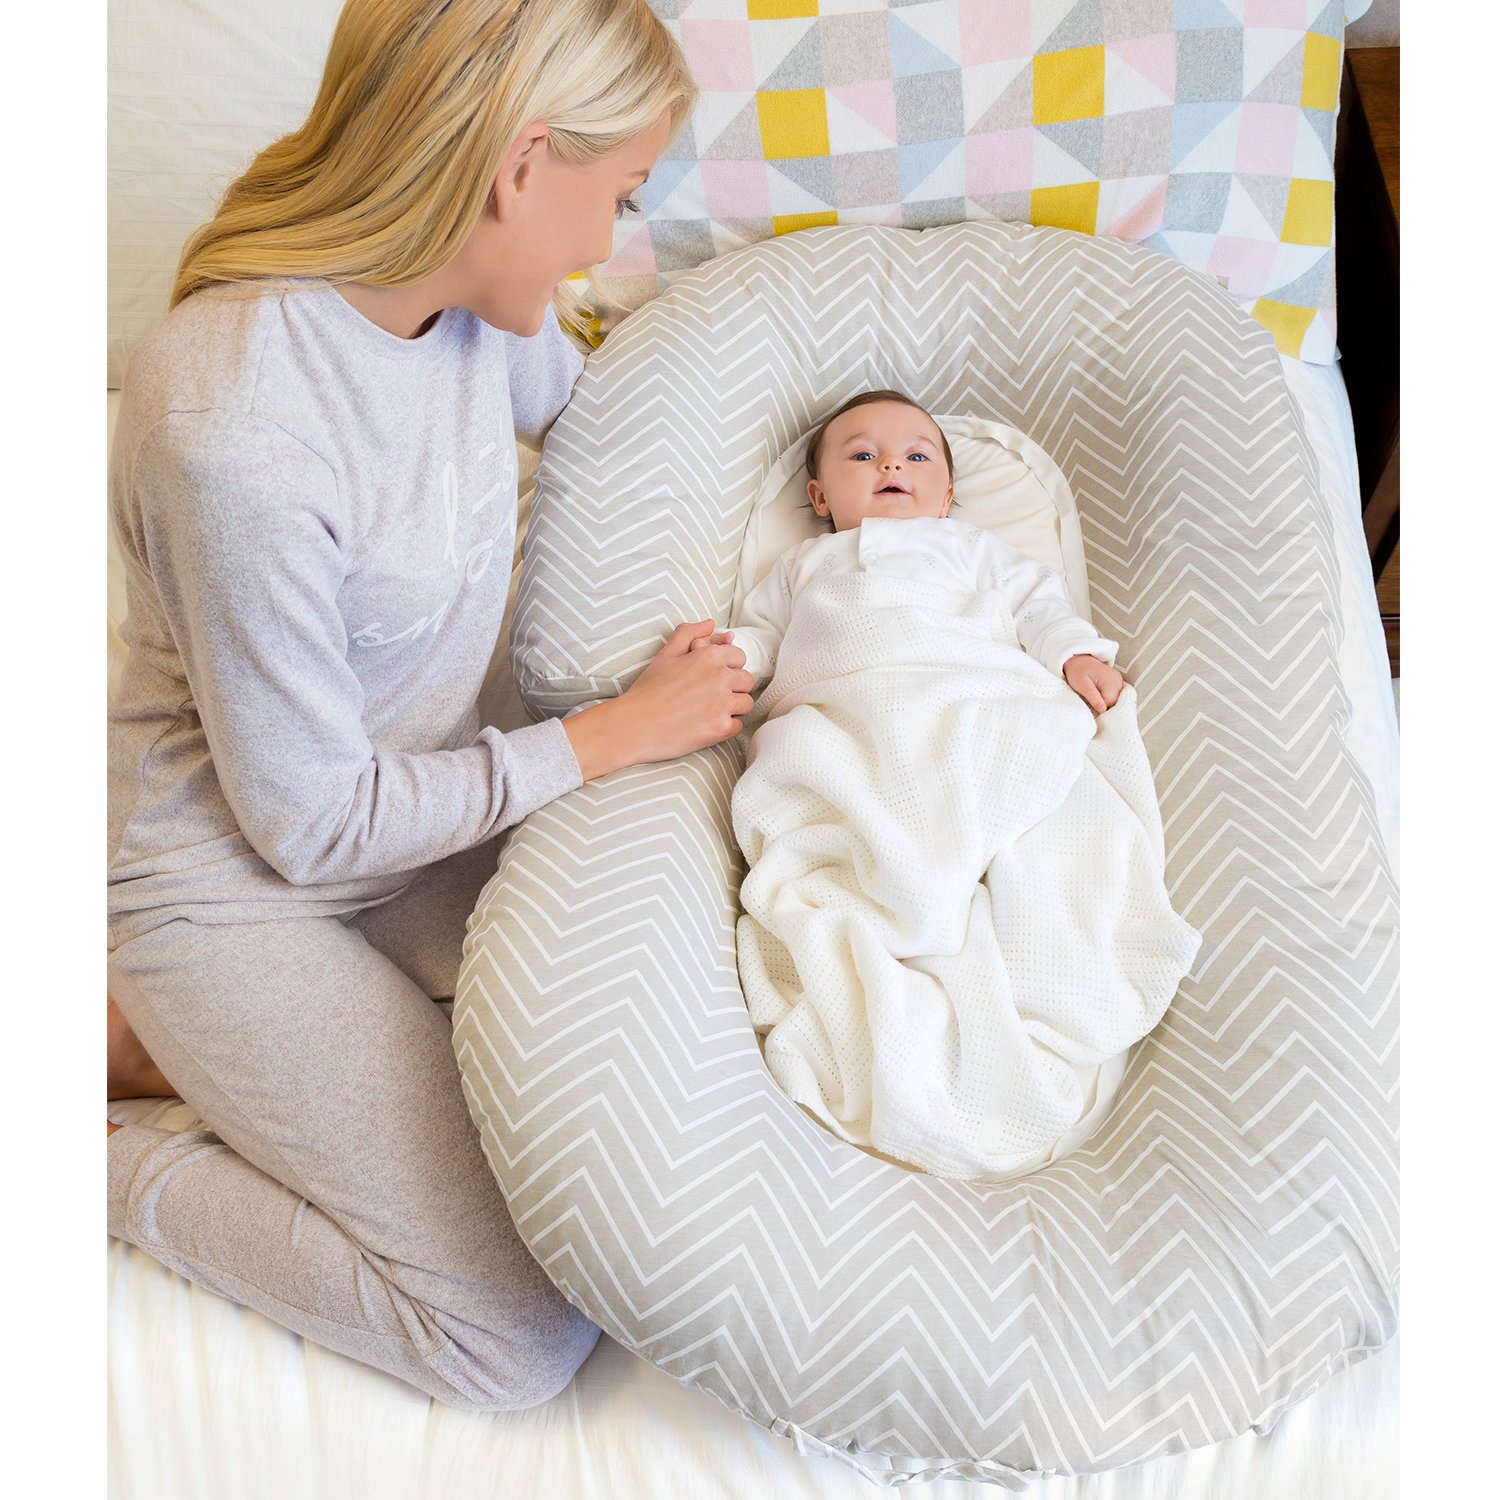 Mum2Me Maternity Pillow & Sleep Pod